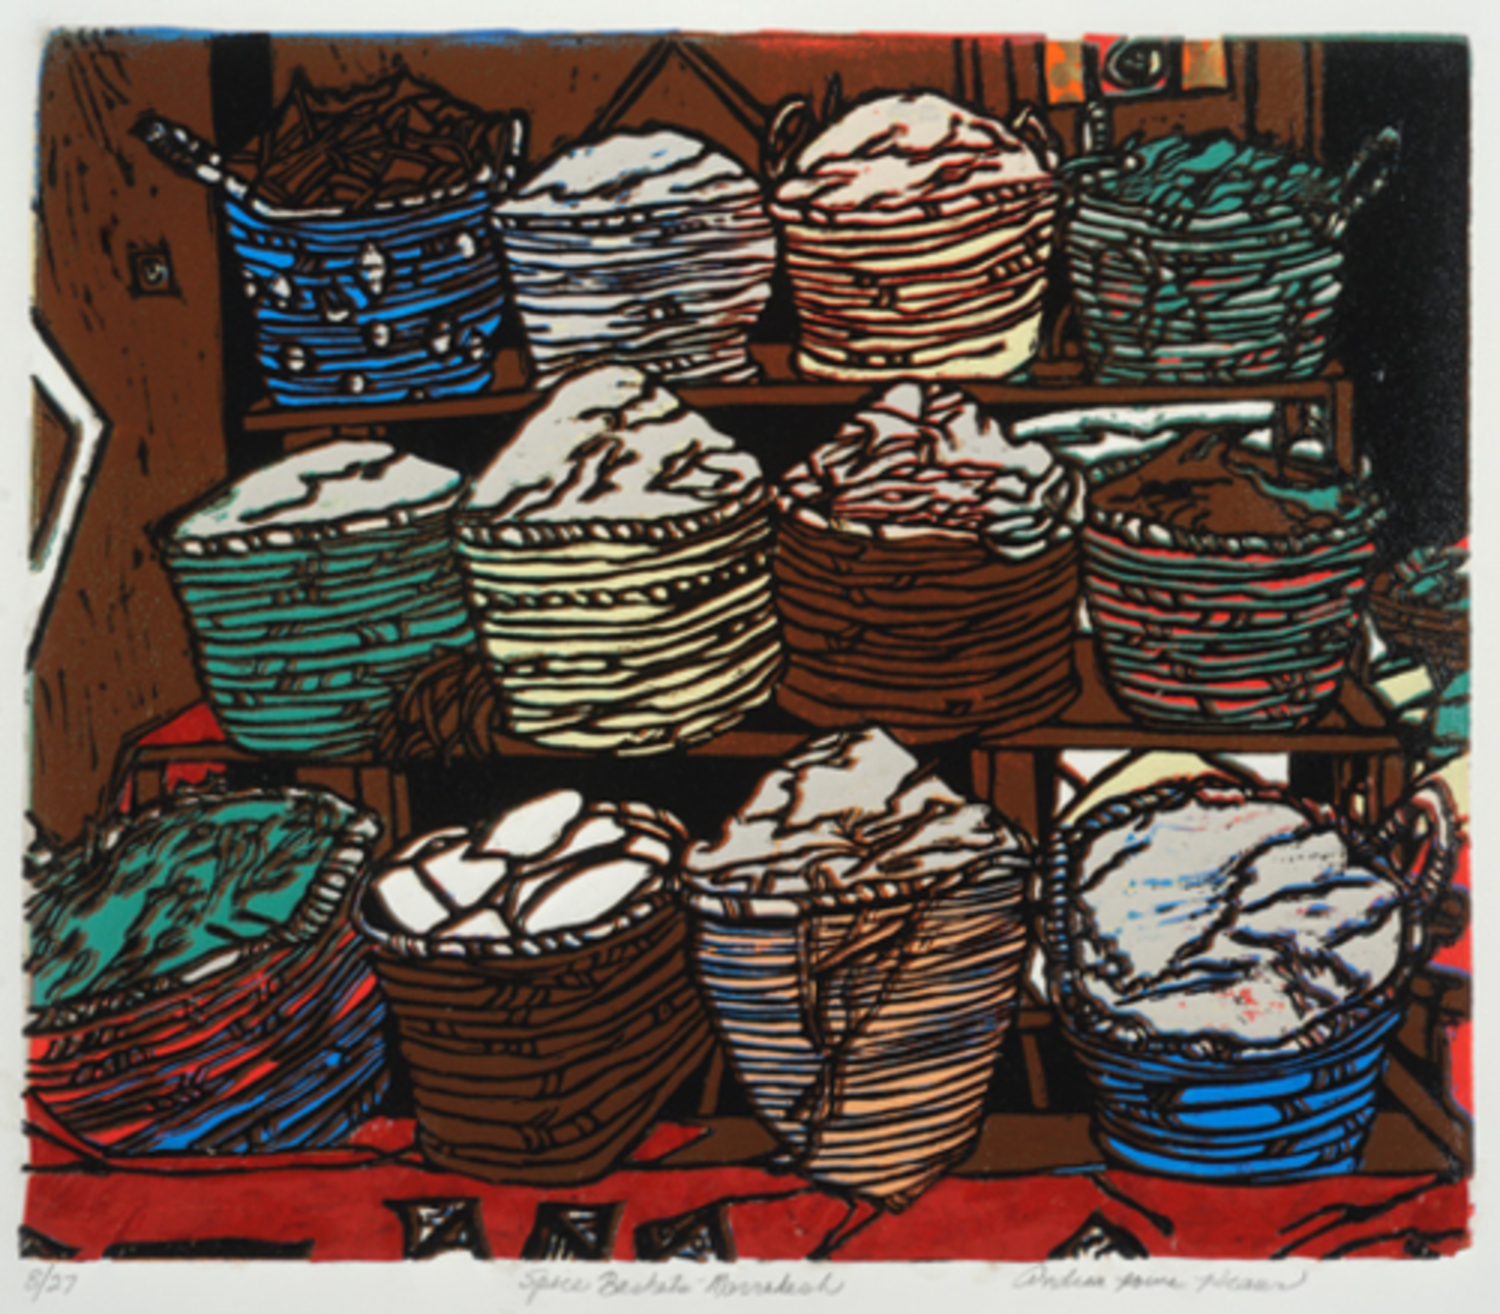   Spice Market Marrakesh   Linoprint/collage  11" x 13" 